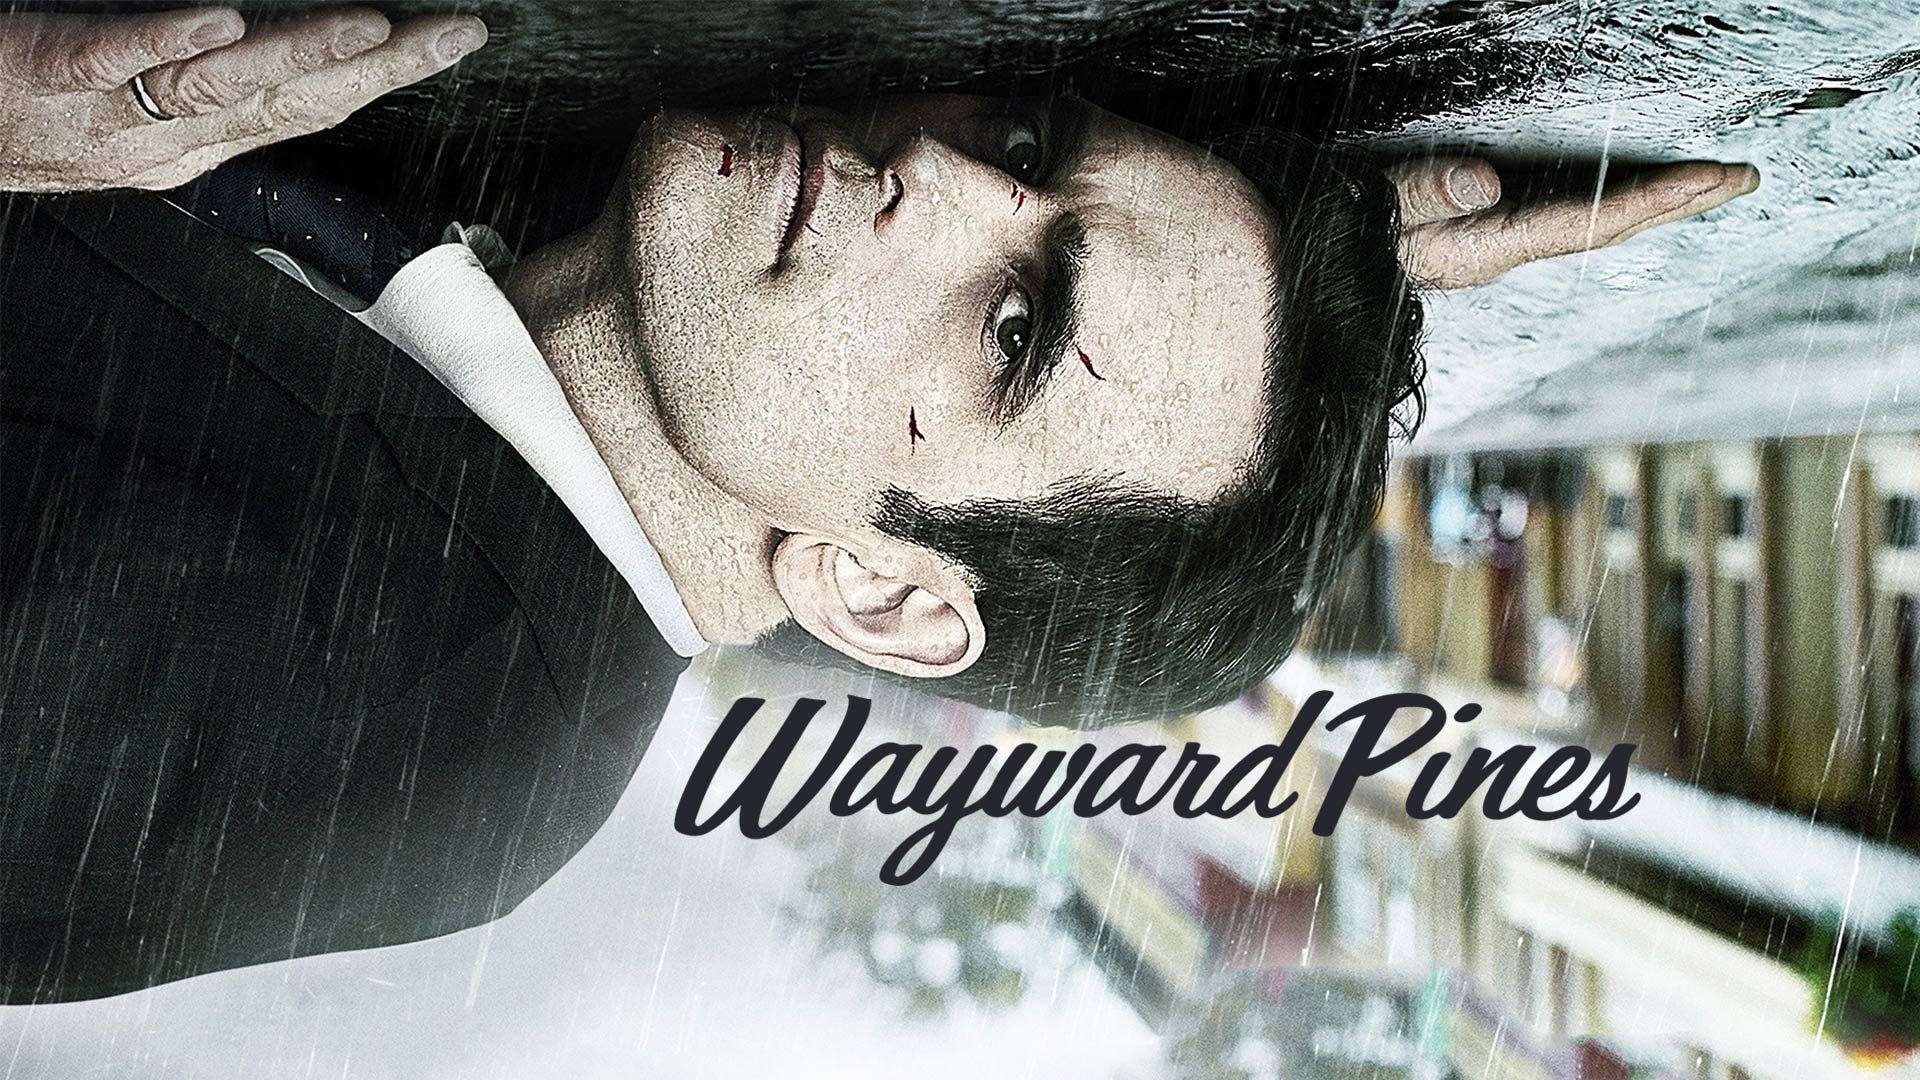 Wayward Pines (TV Series)